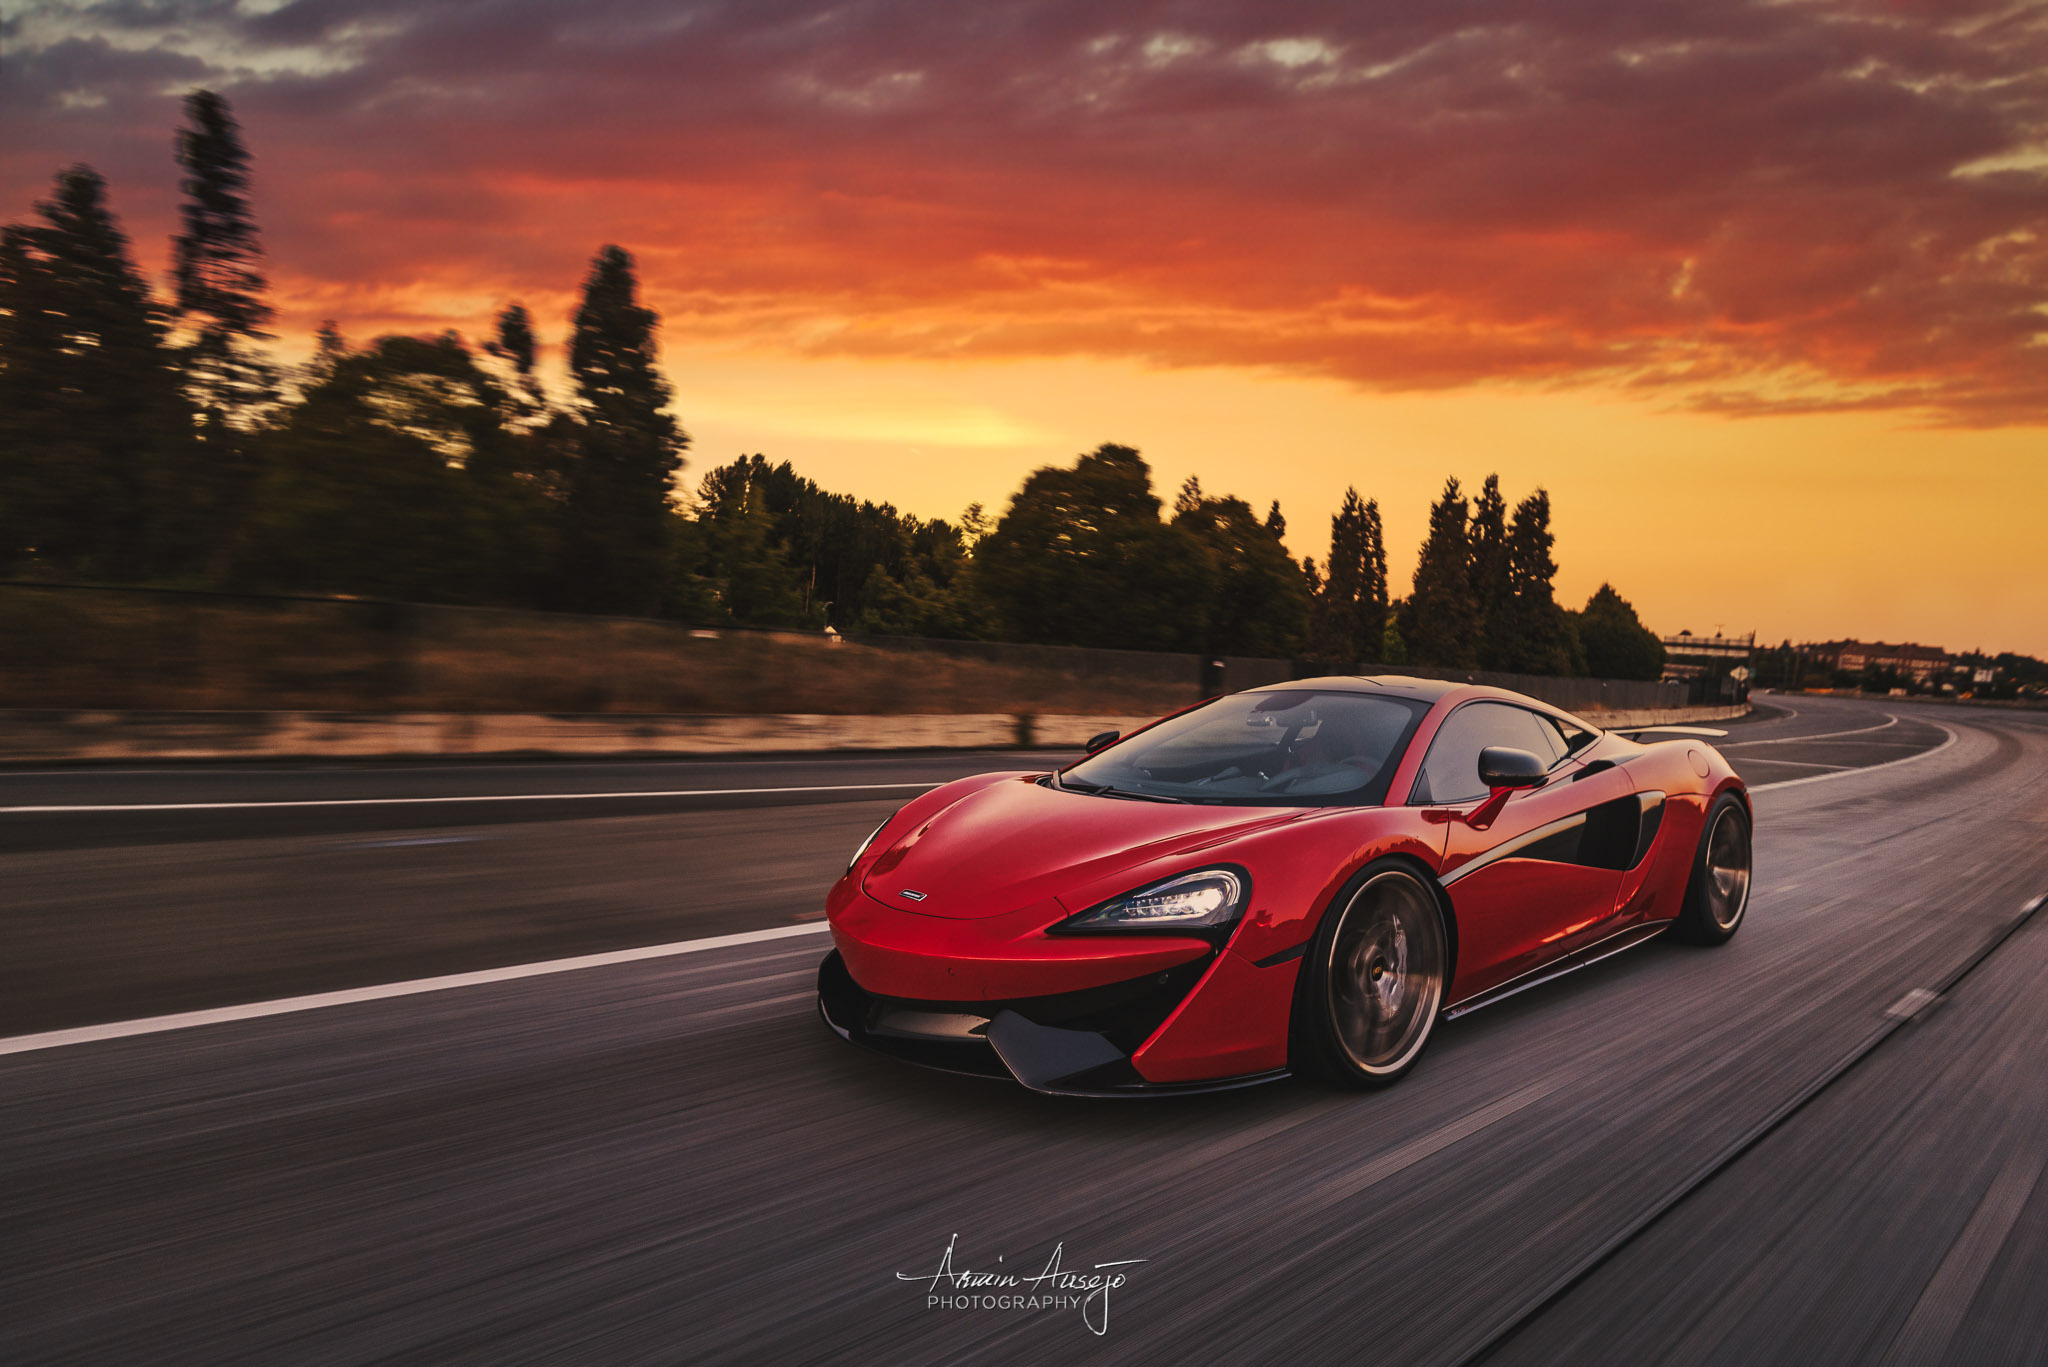 Will’s McLaren 570S, “Sunset Rider” | Armin Ausejo Photography